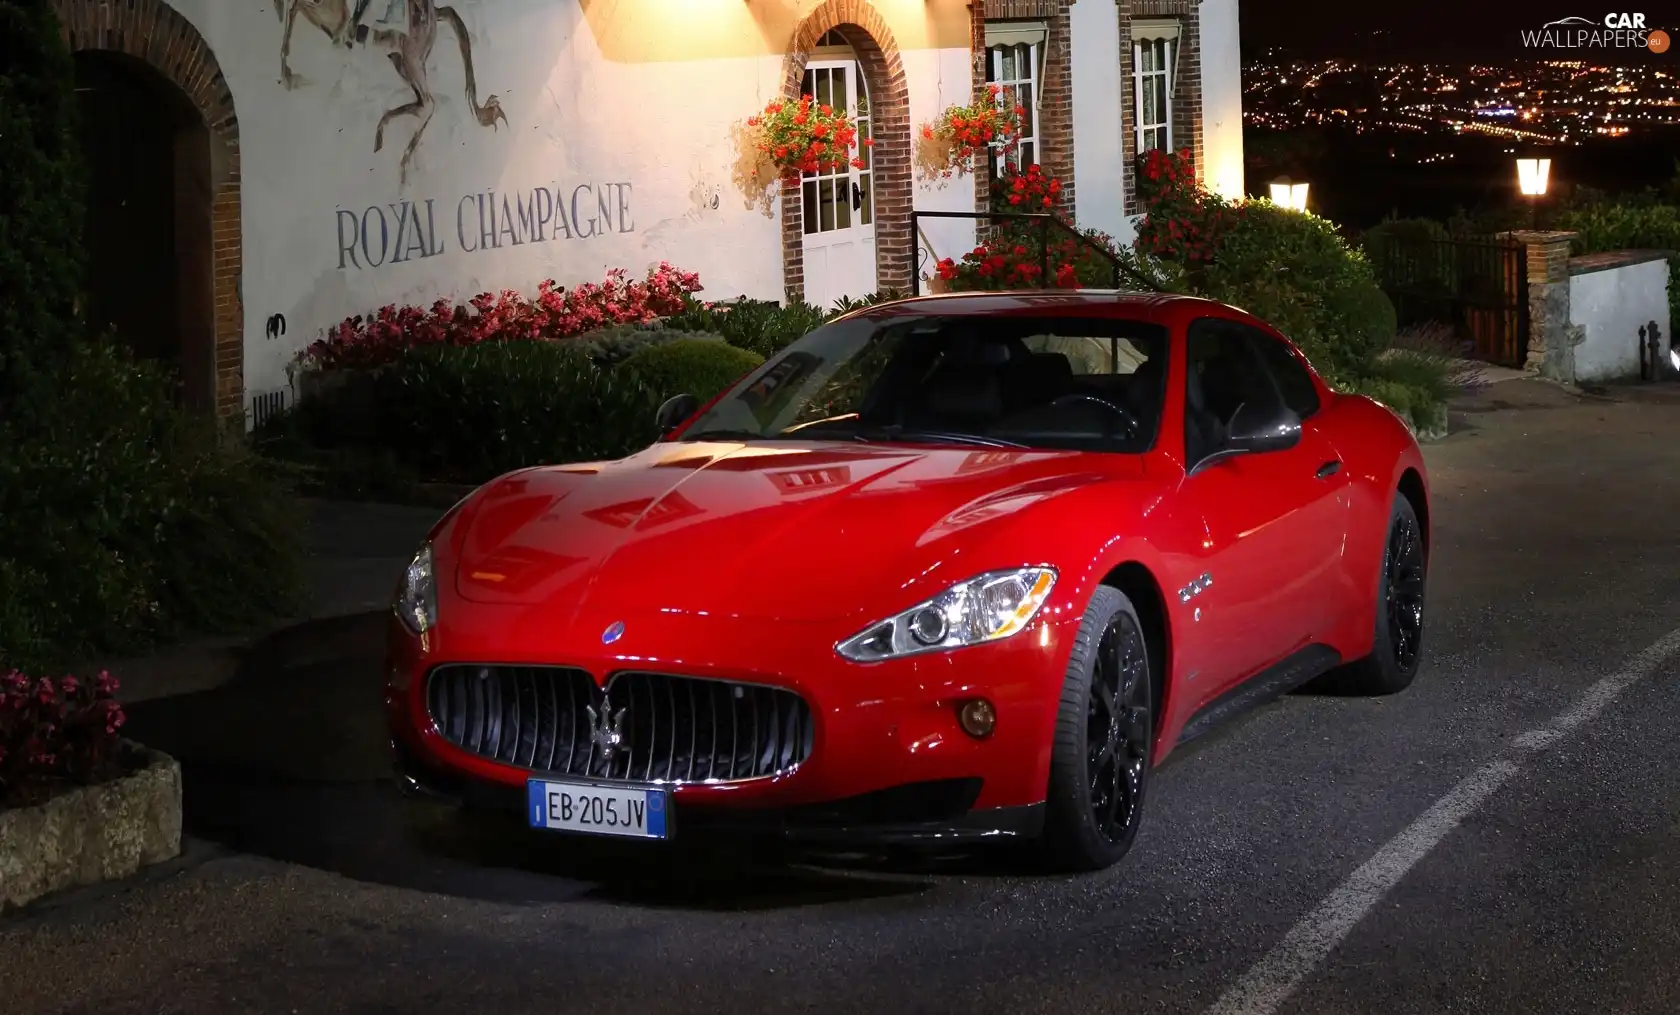 dummy, Maserati Gran Turismo, great